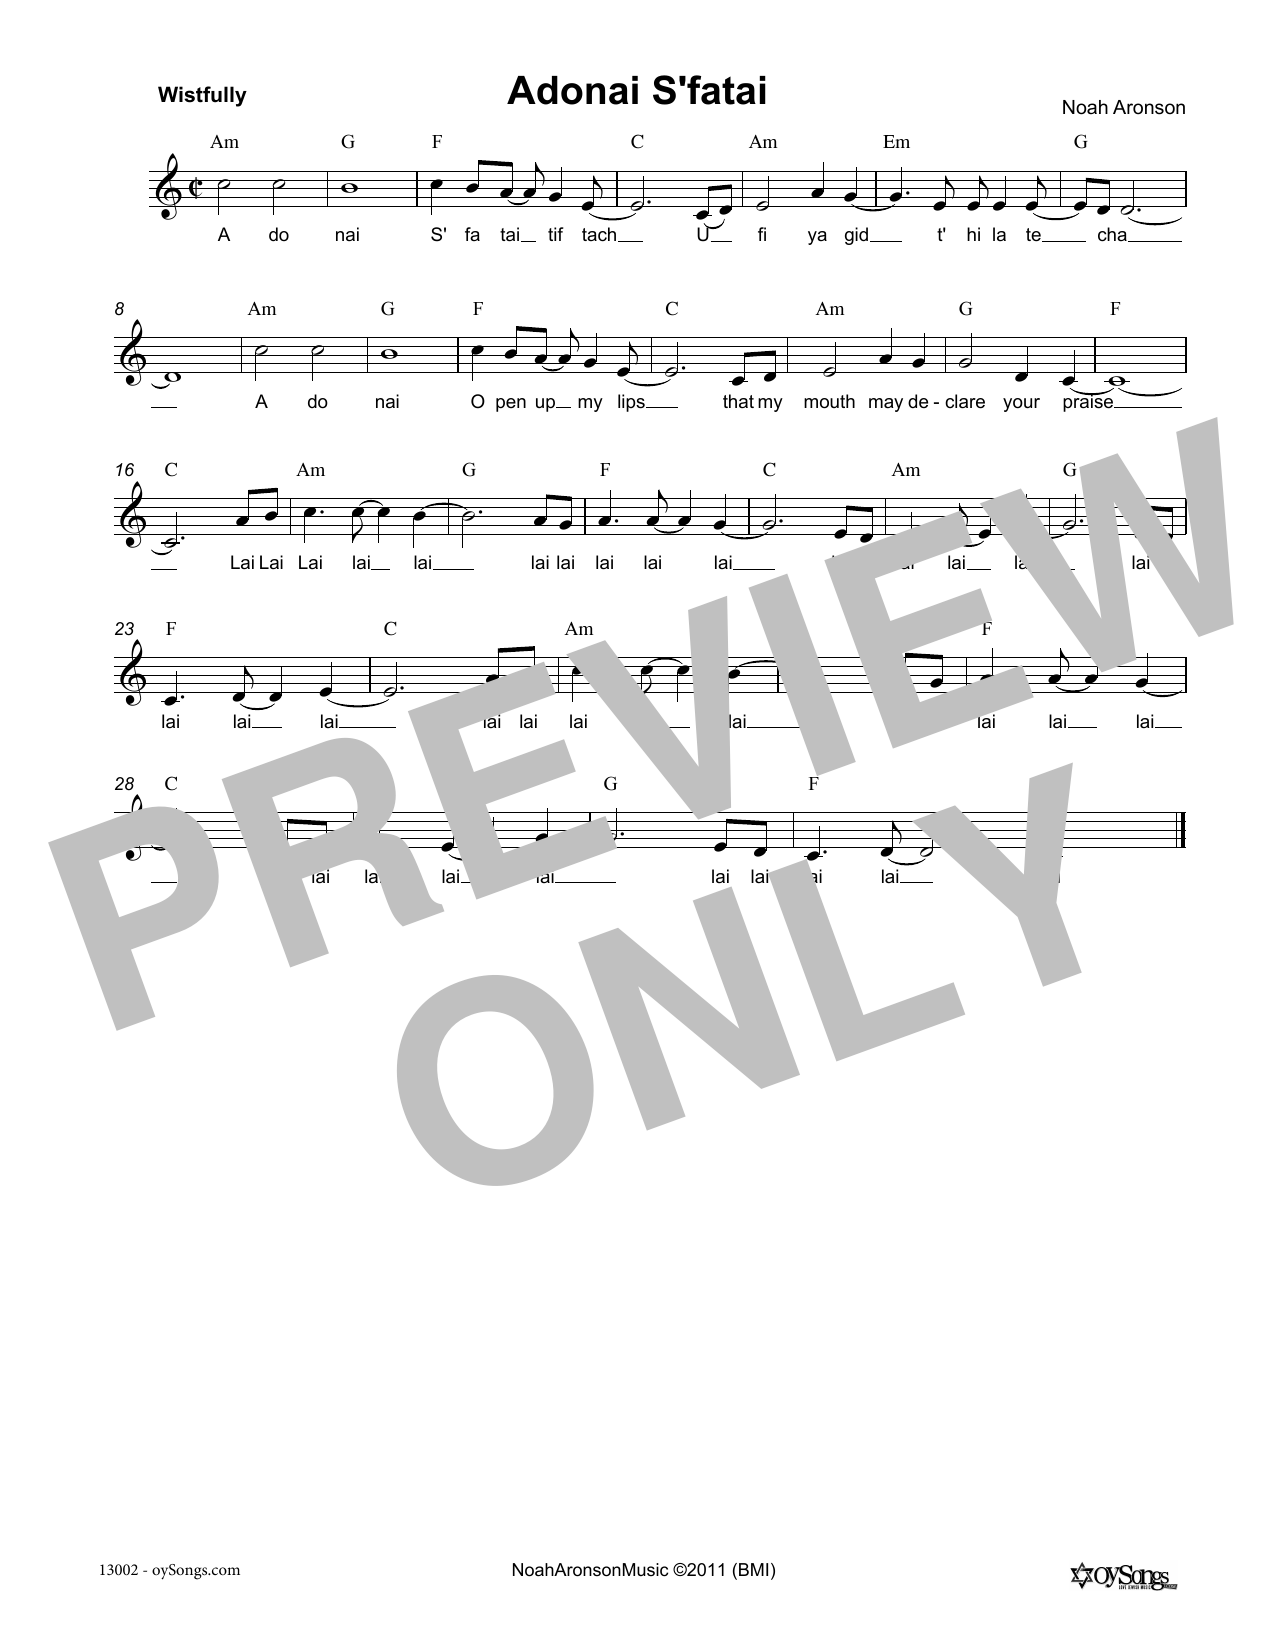 Noah Aronson Adonai S'fatai Sheet Music Notes & Chords for Melody Line, Lyrics & Chords - Download or Print PDF